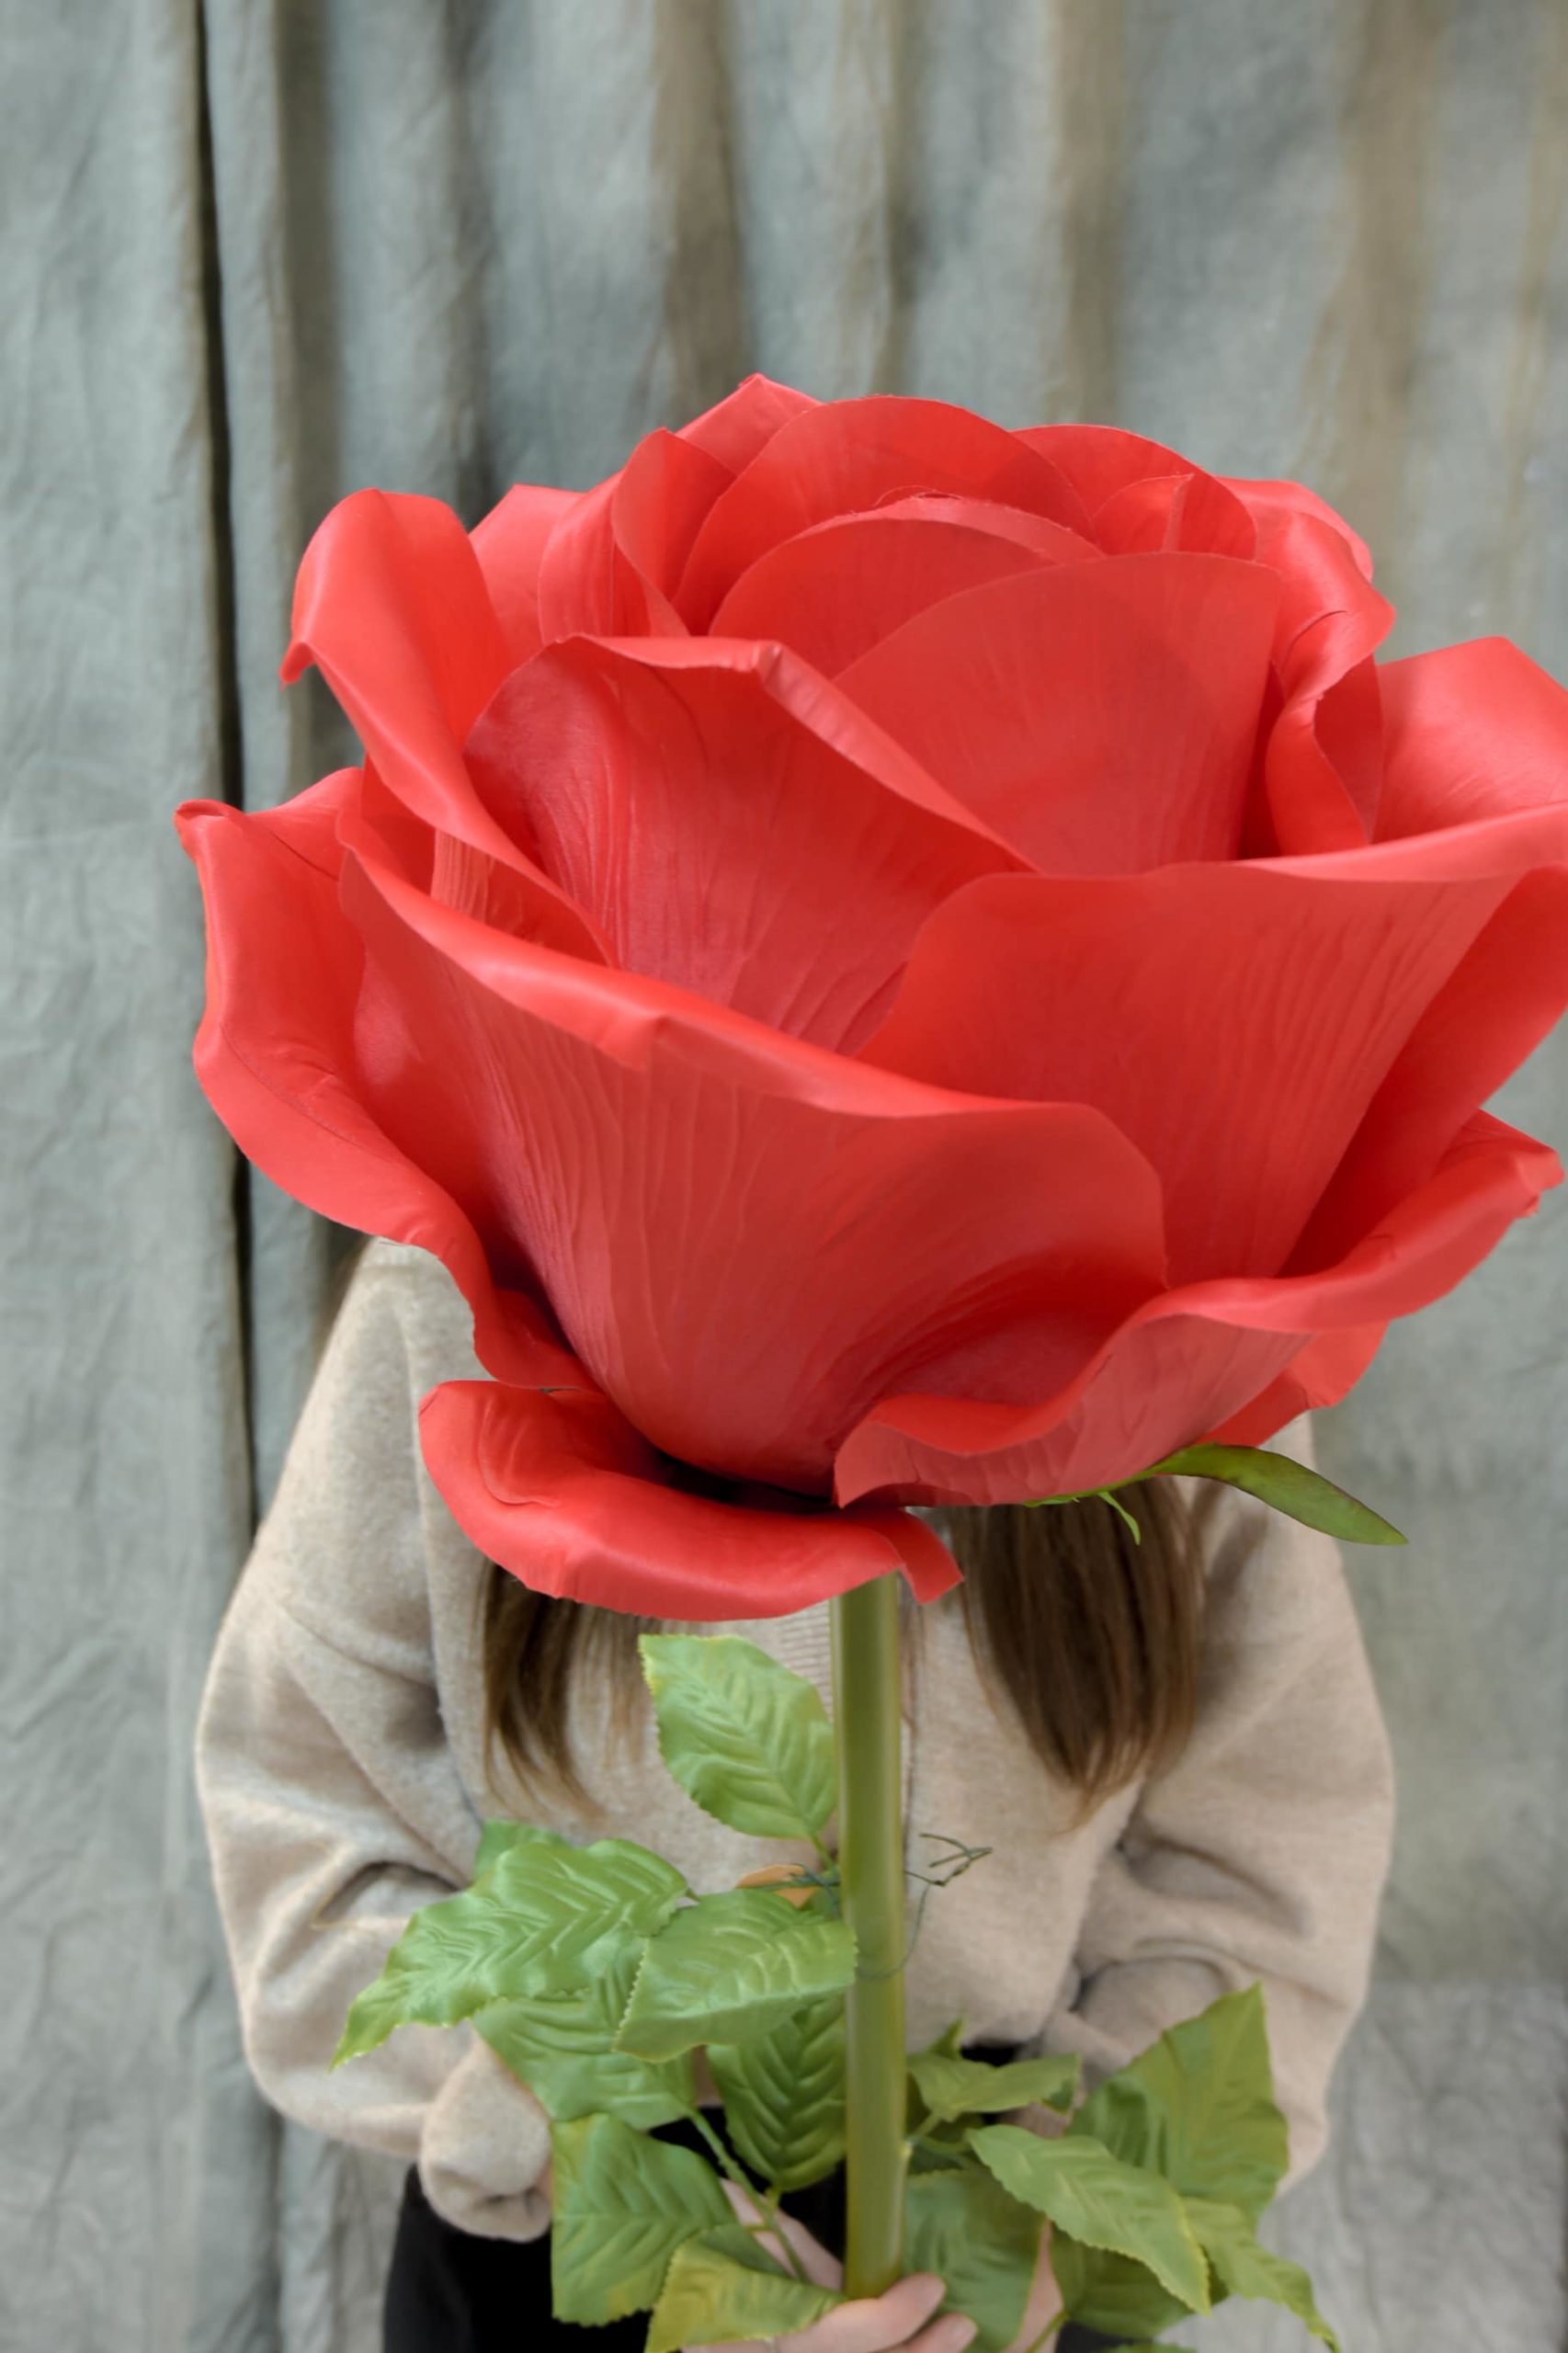 La rose géante d'Alice - Blumstein Fleuriste Strasbourg